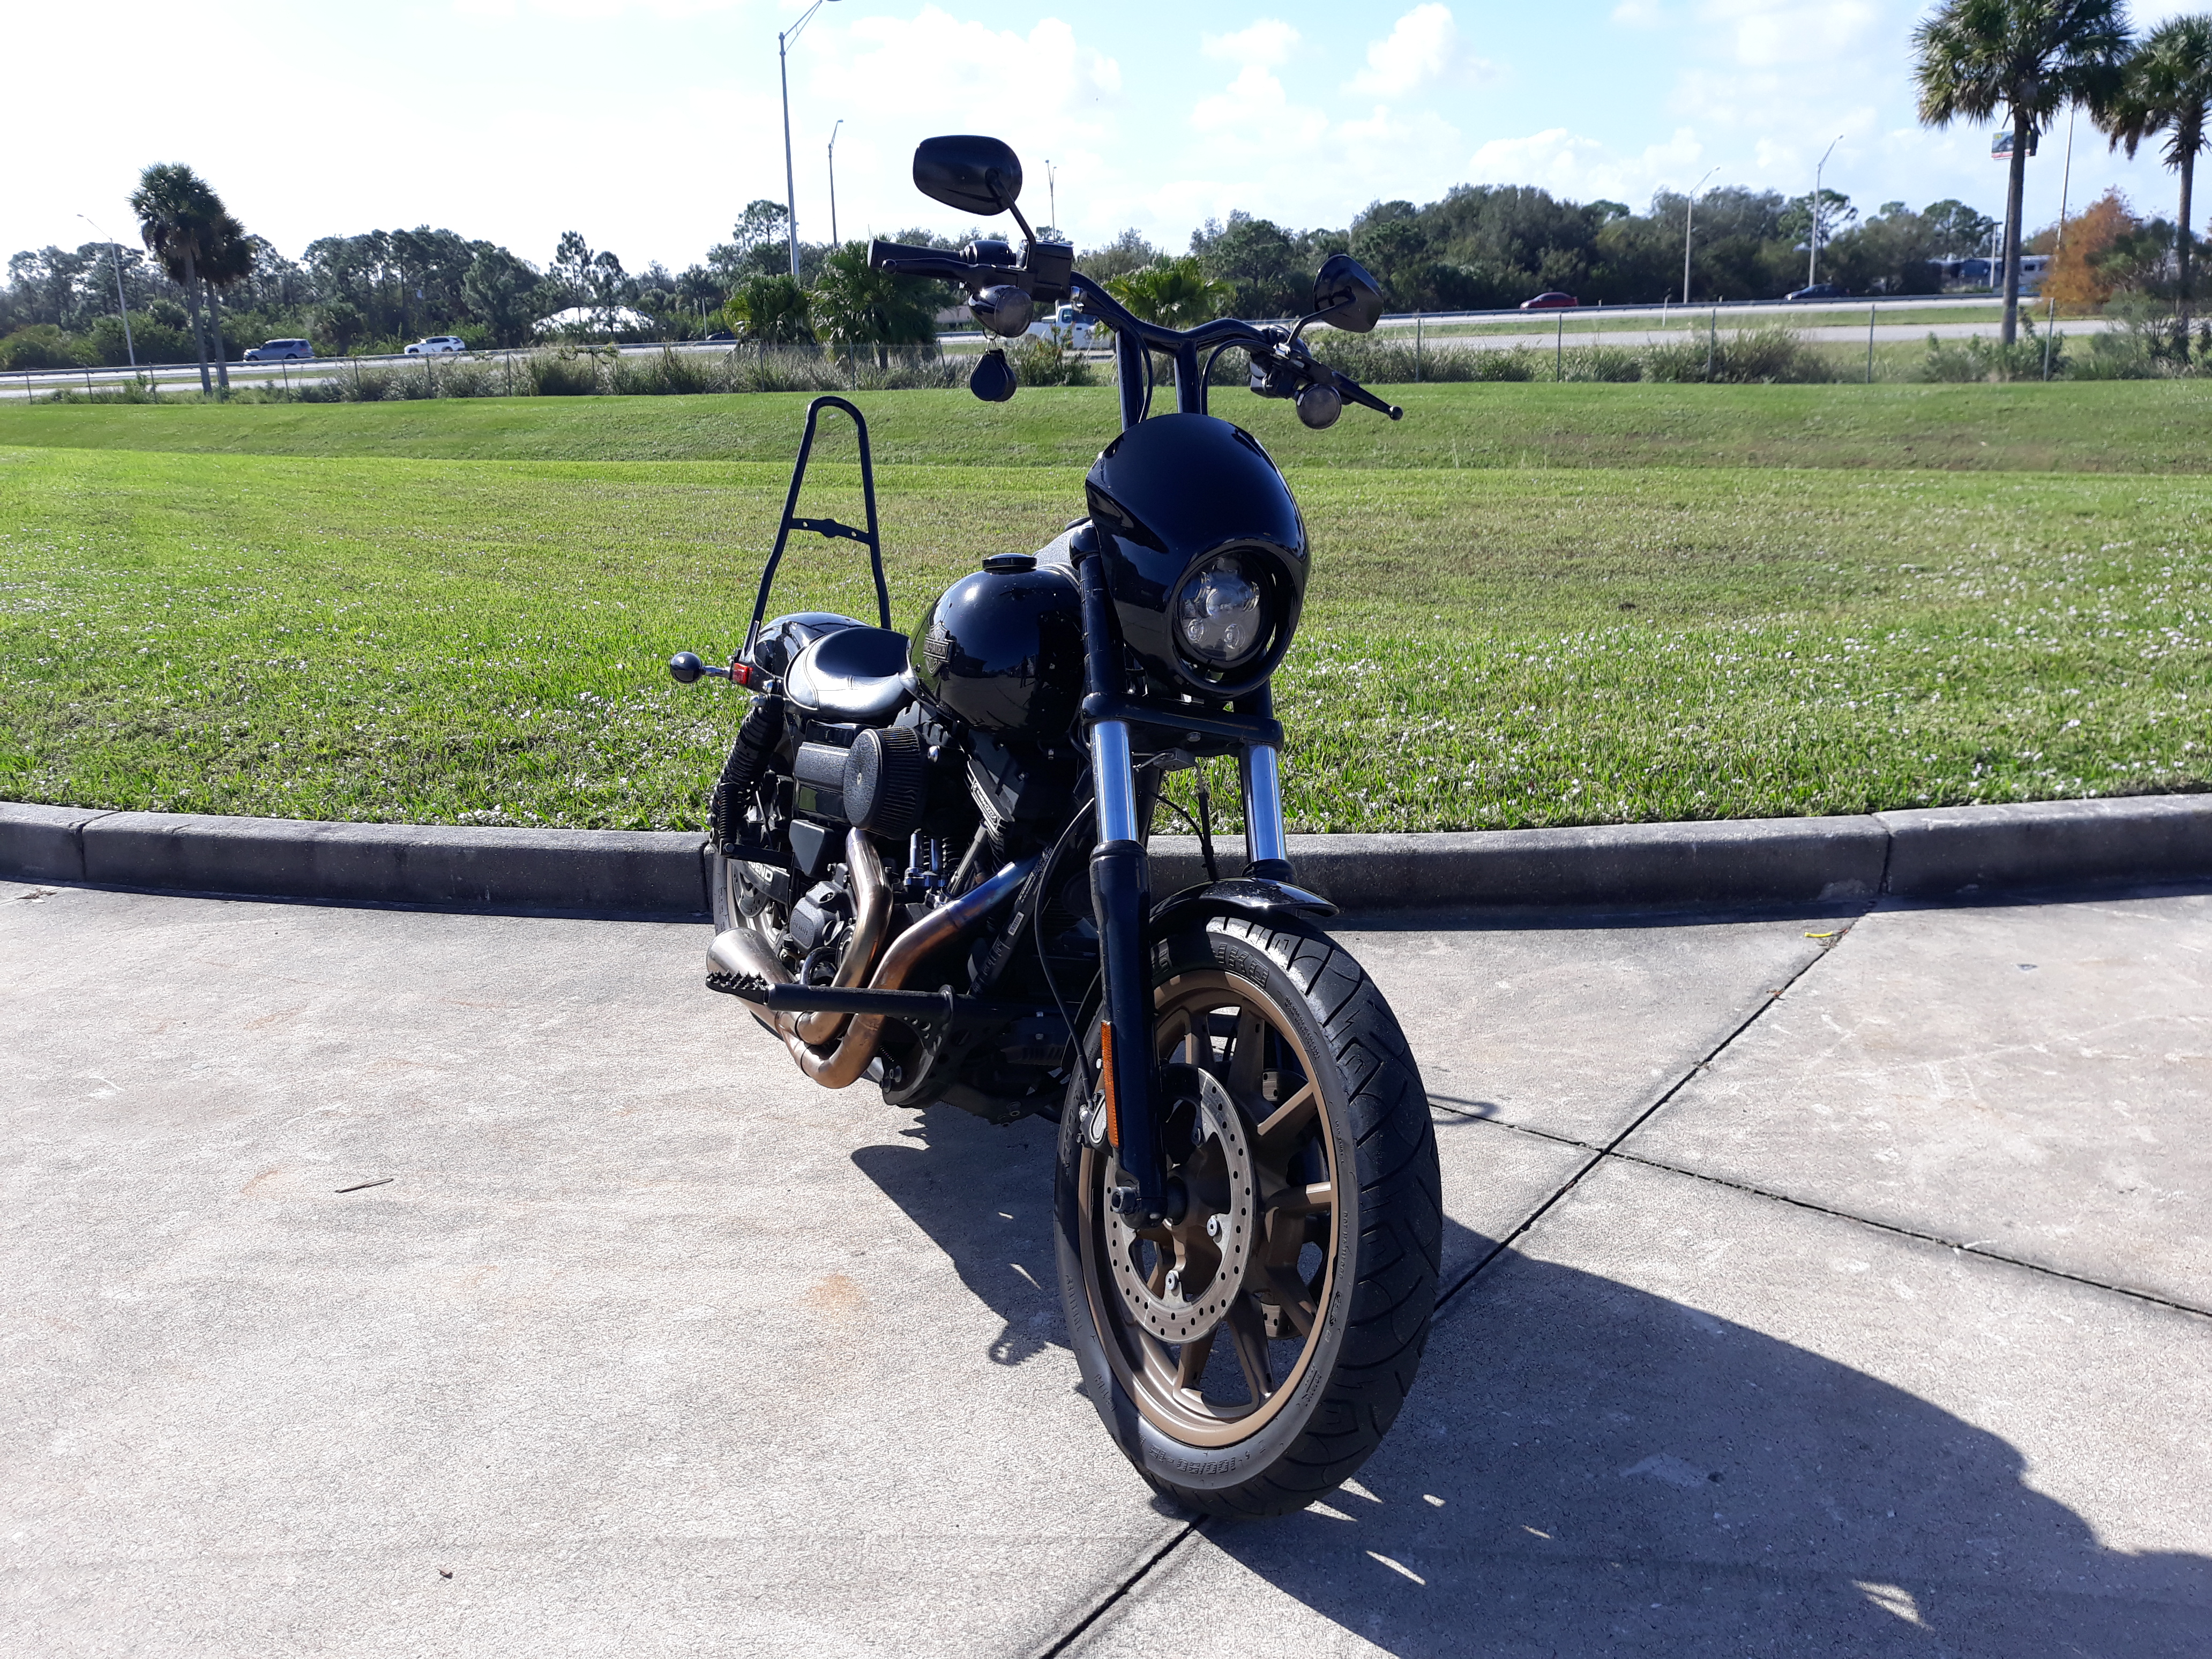 Pre-Owned 2017 Harley-Davidson FXDLS in Palm Bay #301200 | Space Coast Harley-Davidson